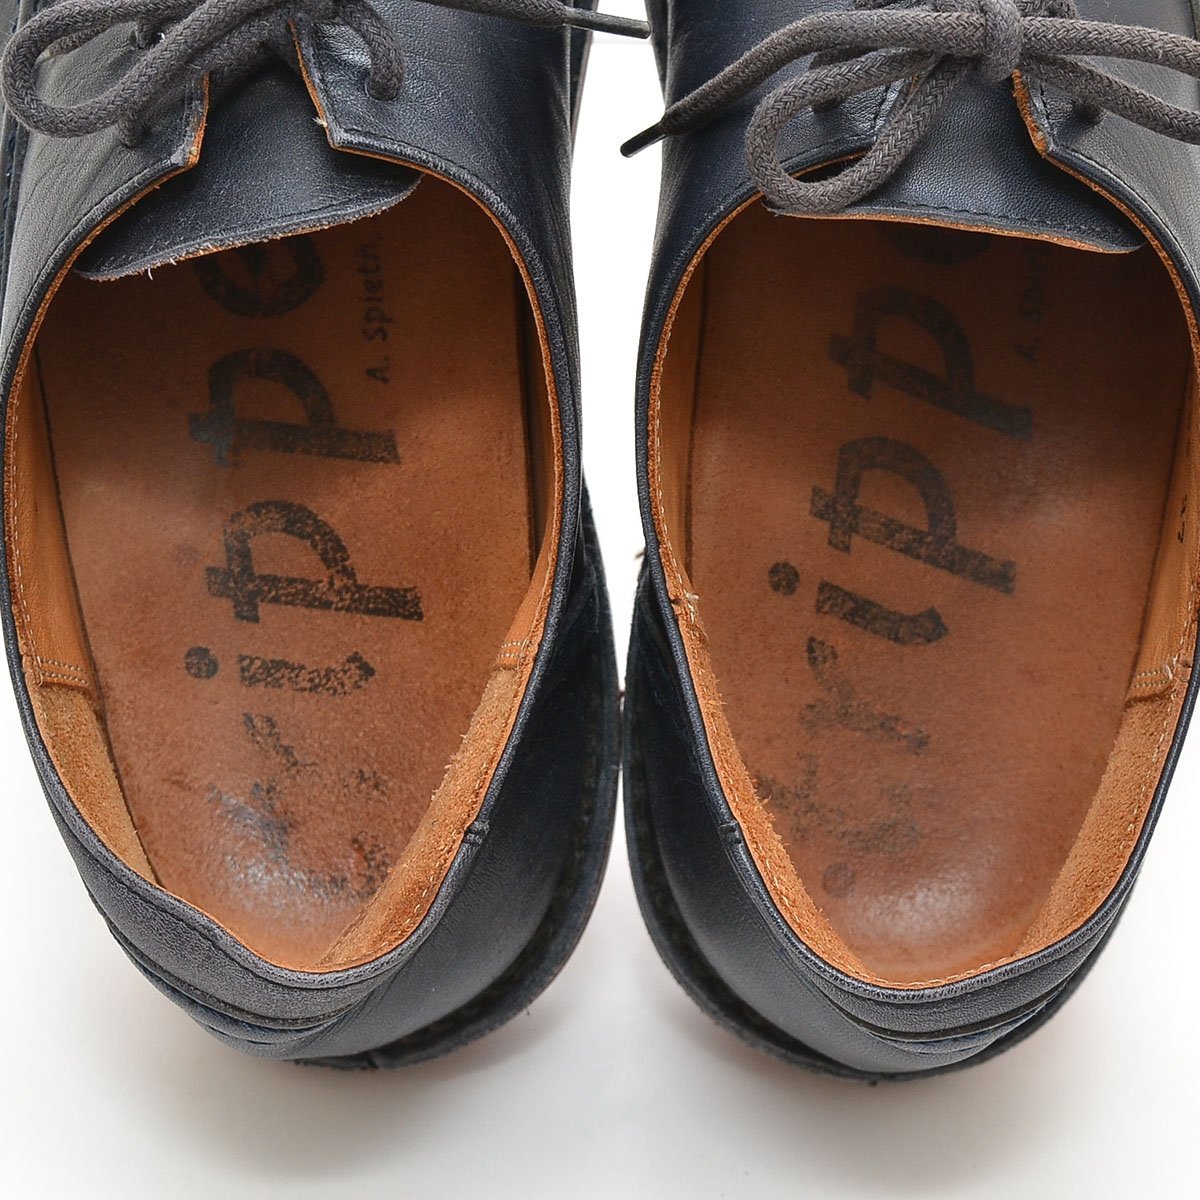 ◇377759 trippen トリッペン レザースニーカー 革靴 サイズ37 レディース ドイツ製 ネイビー 無地_画像6